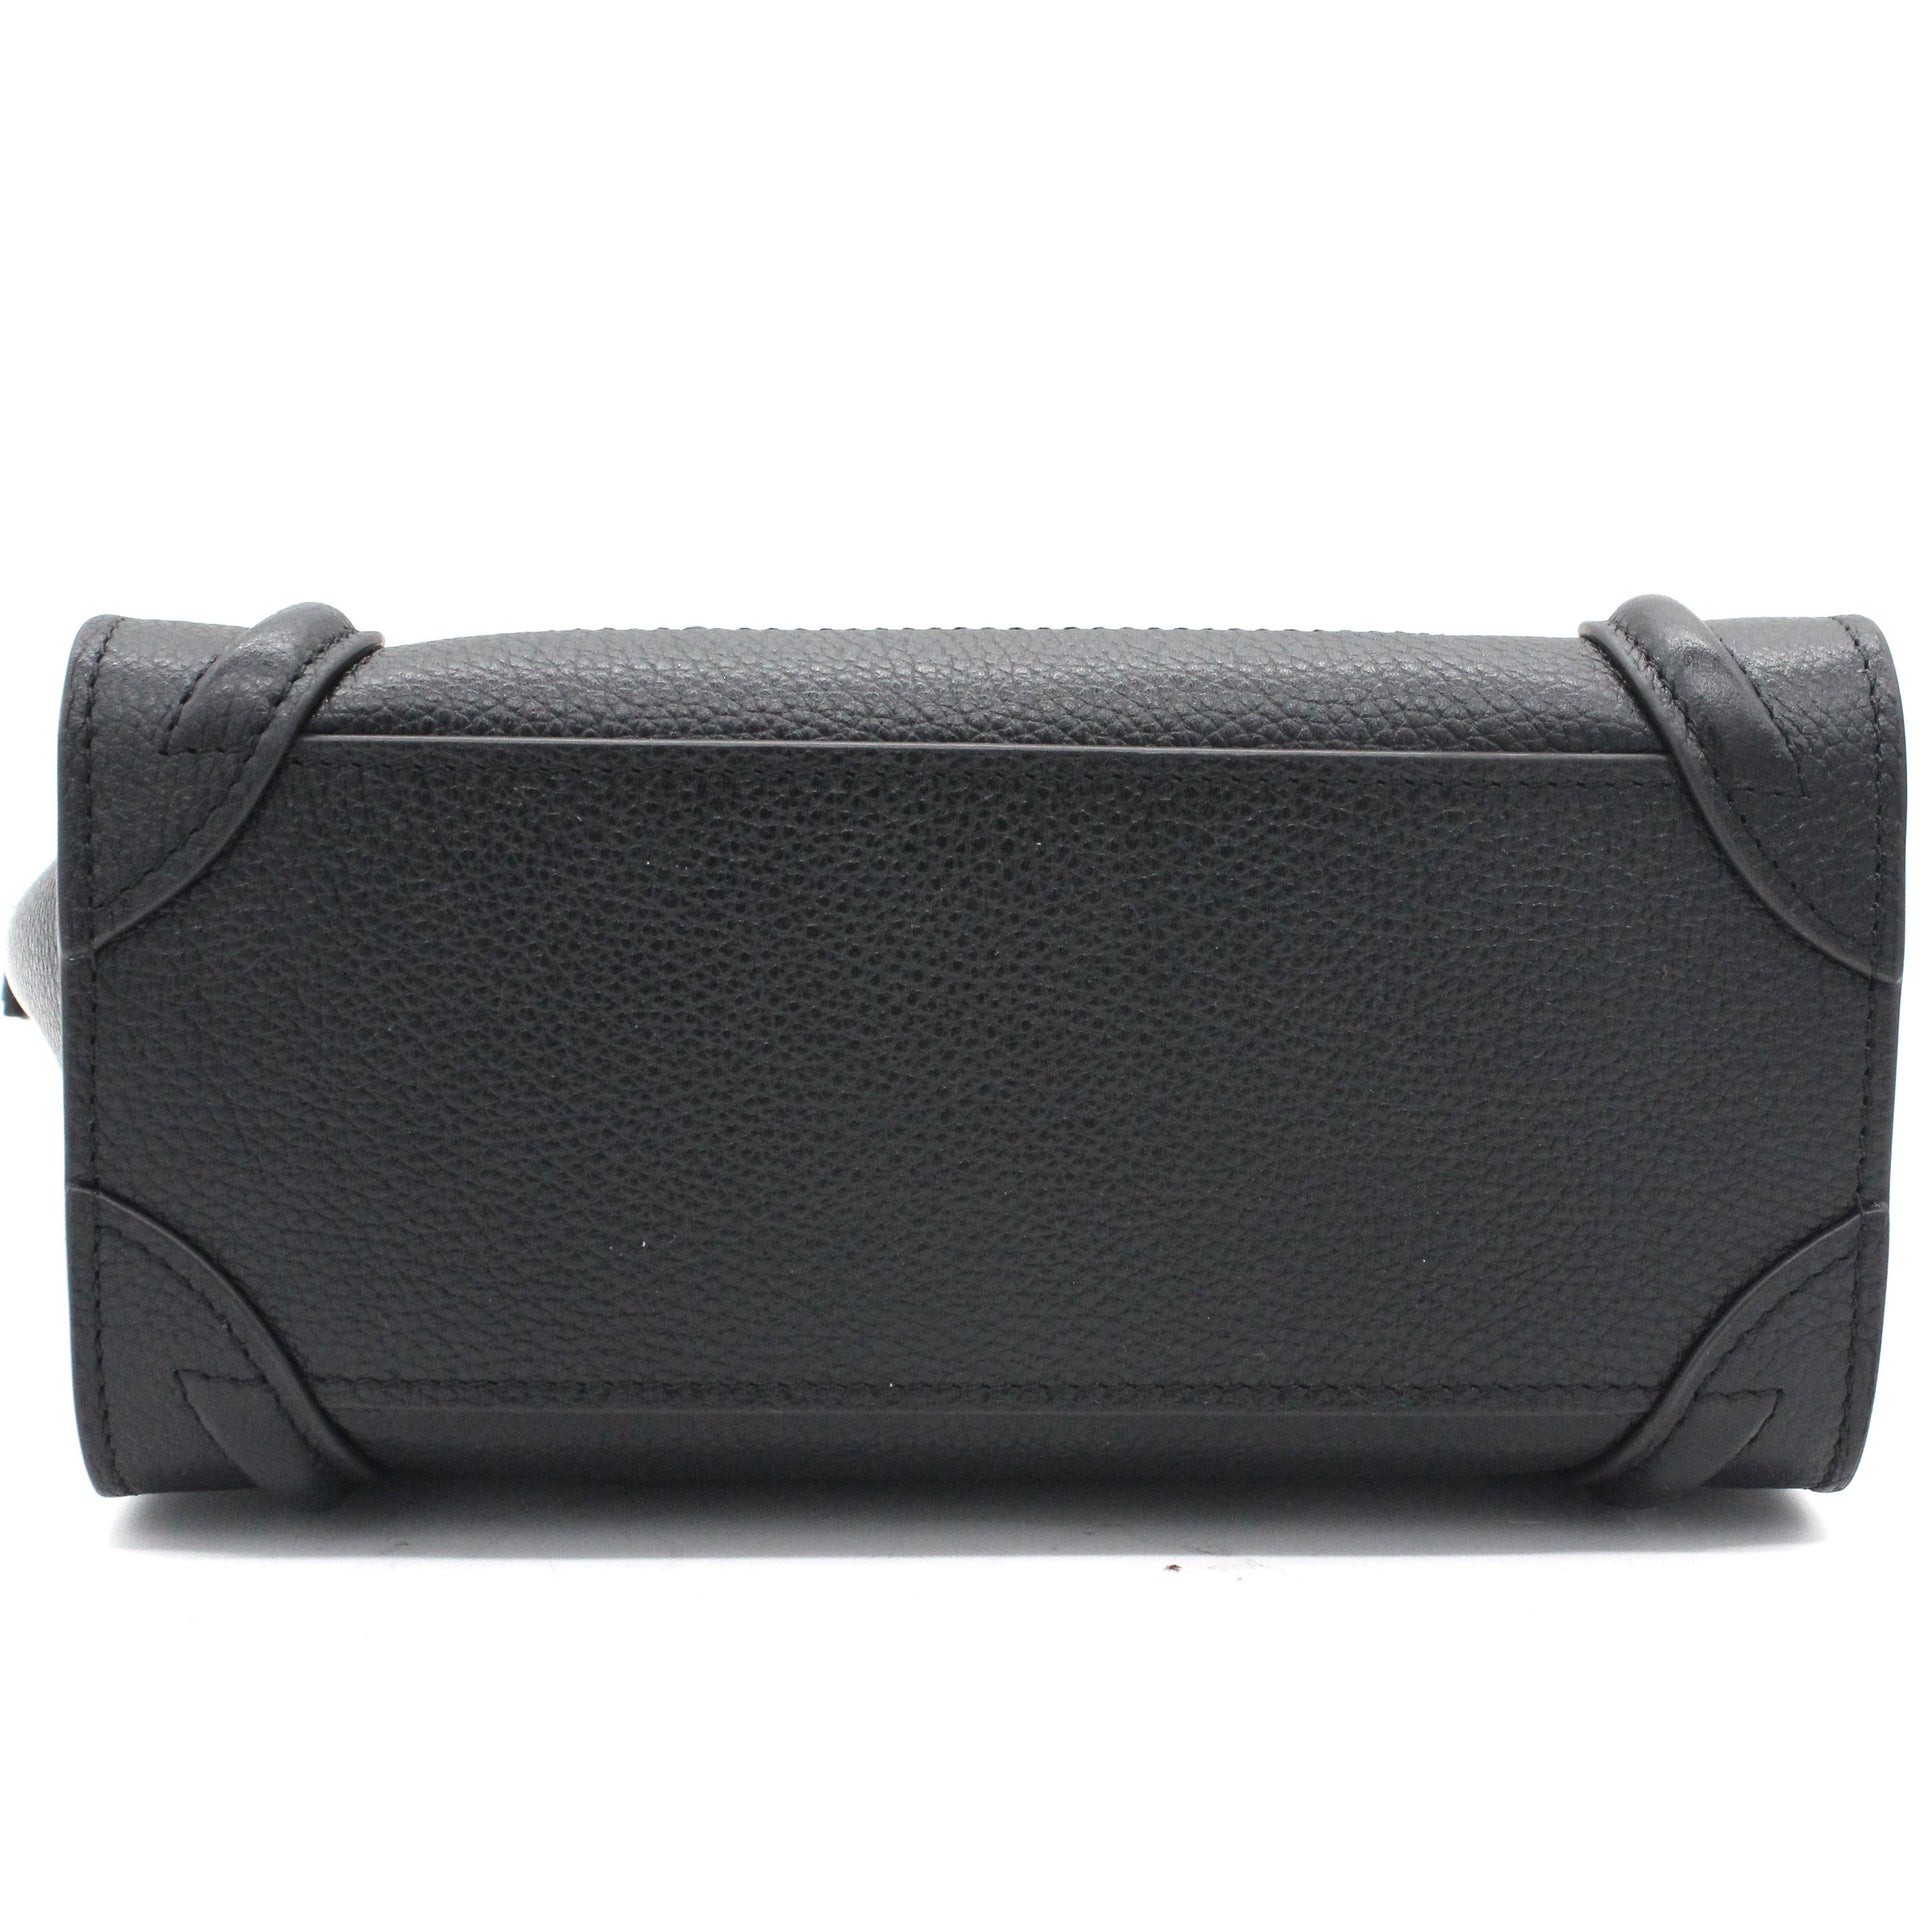 Black Leather Nano Luggage Tote